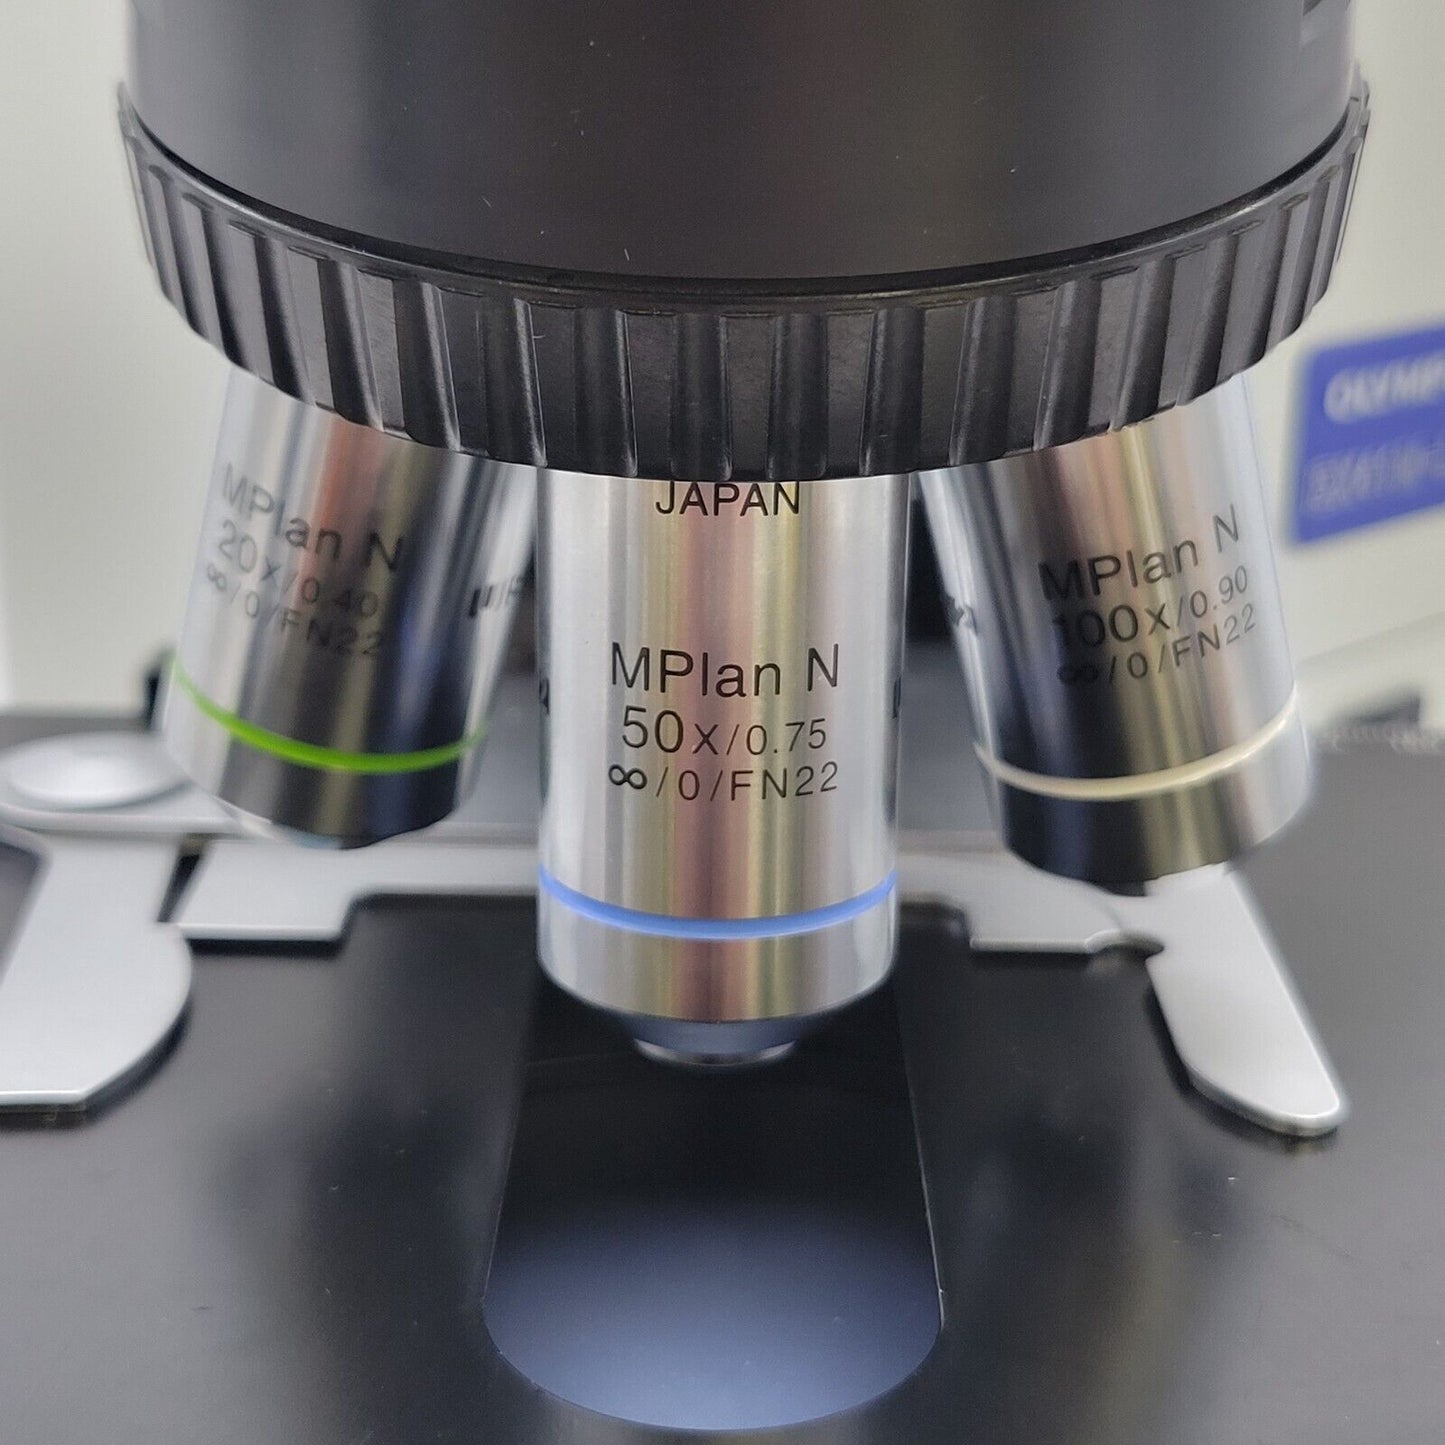 Olympus Microscope BXM41-LED Metallurgical with Trinocular Head - microscopemarketplace